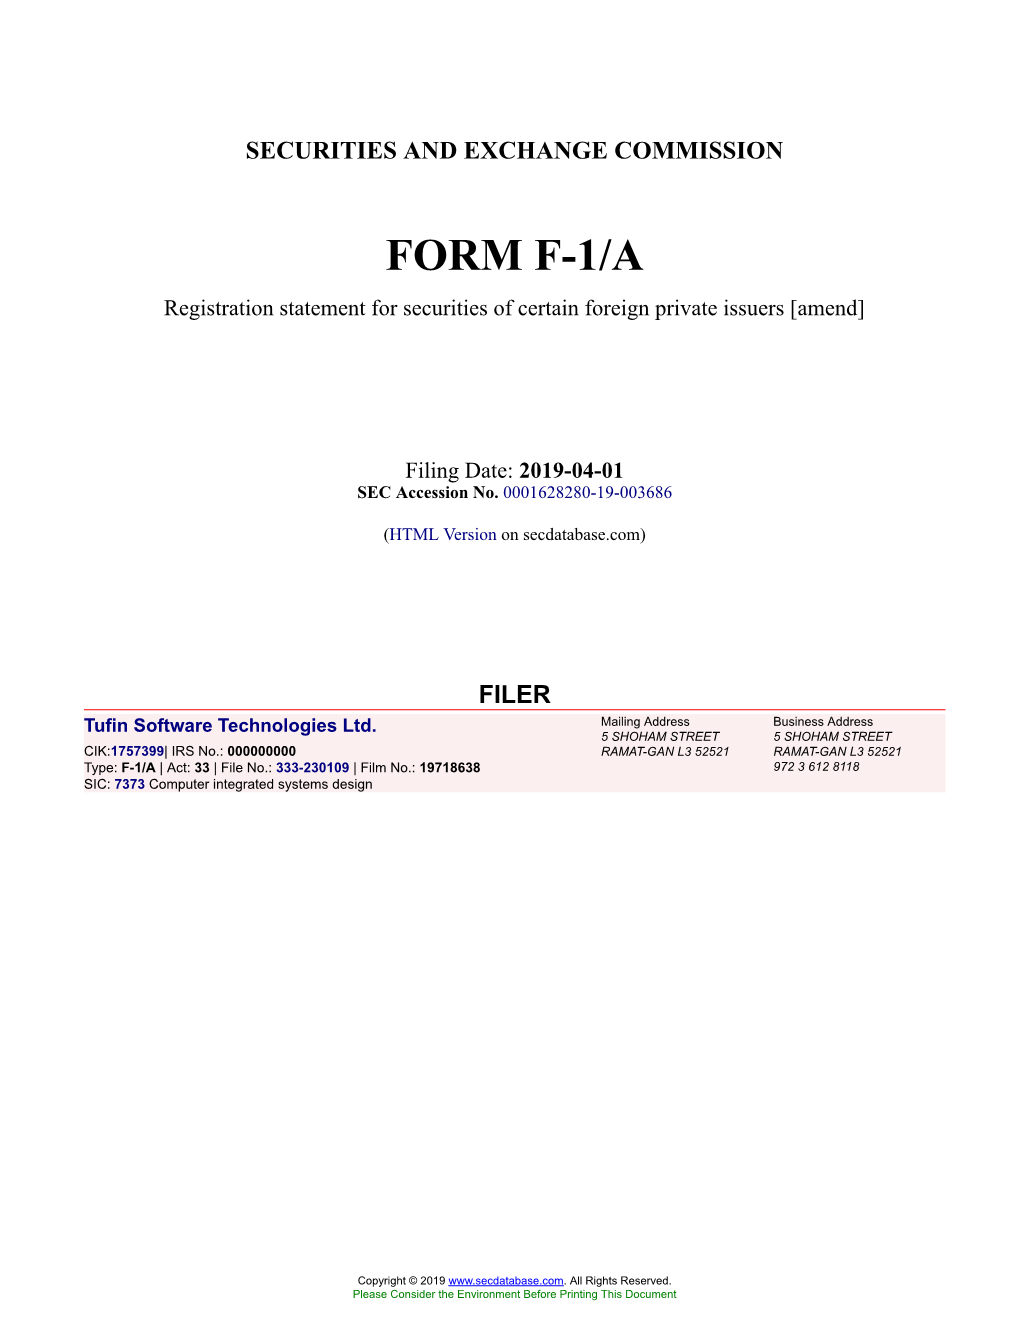 Tufin Software Technologies Ltd. Form F-1/A Filed 2019-04-01